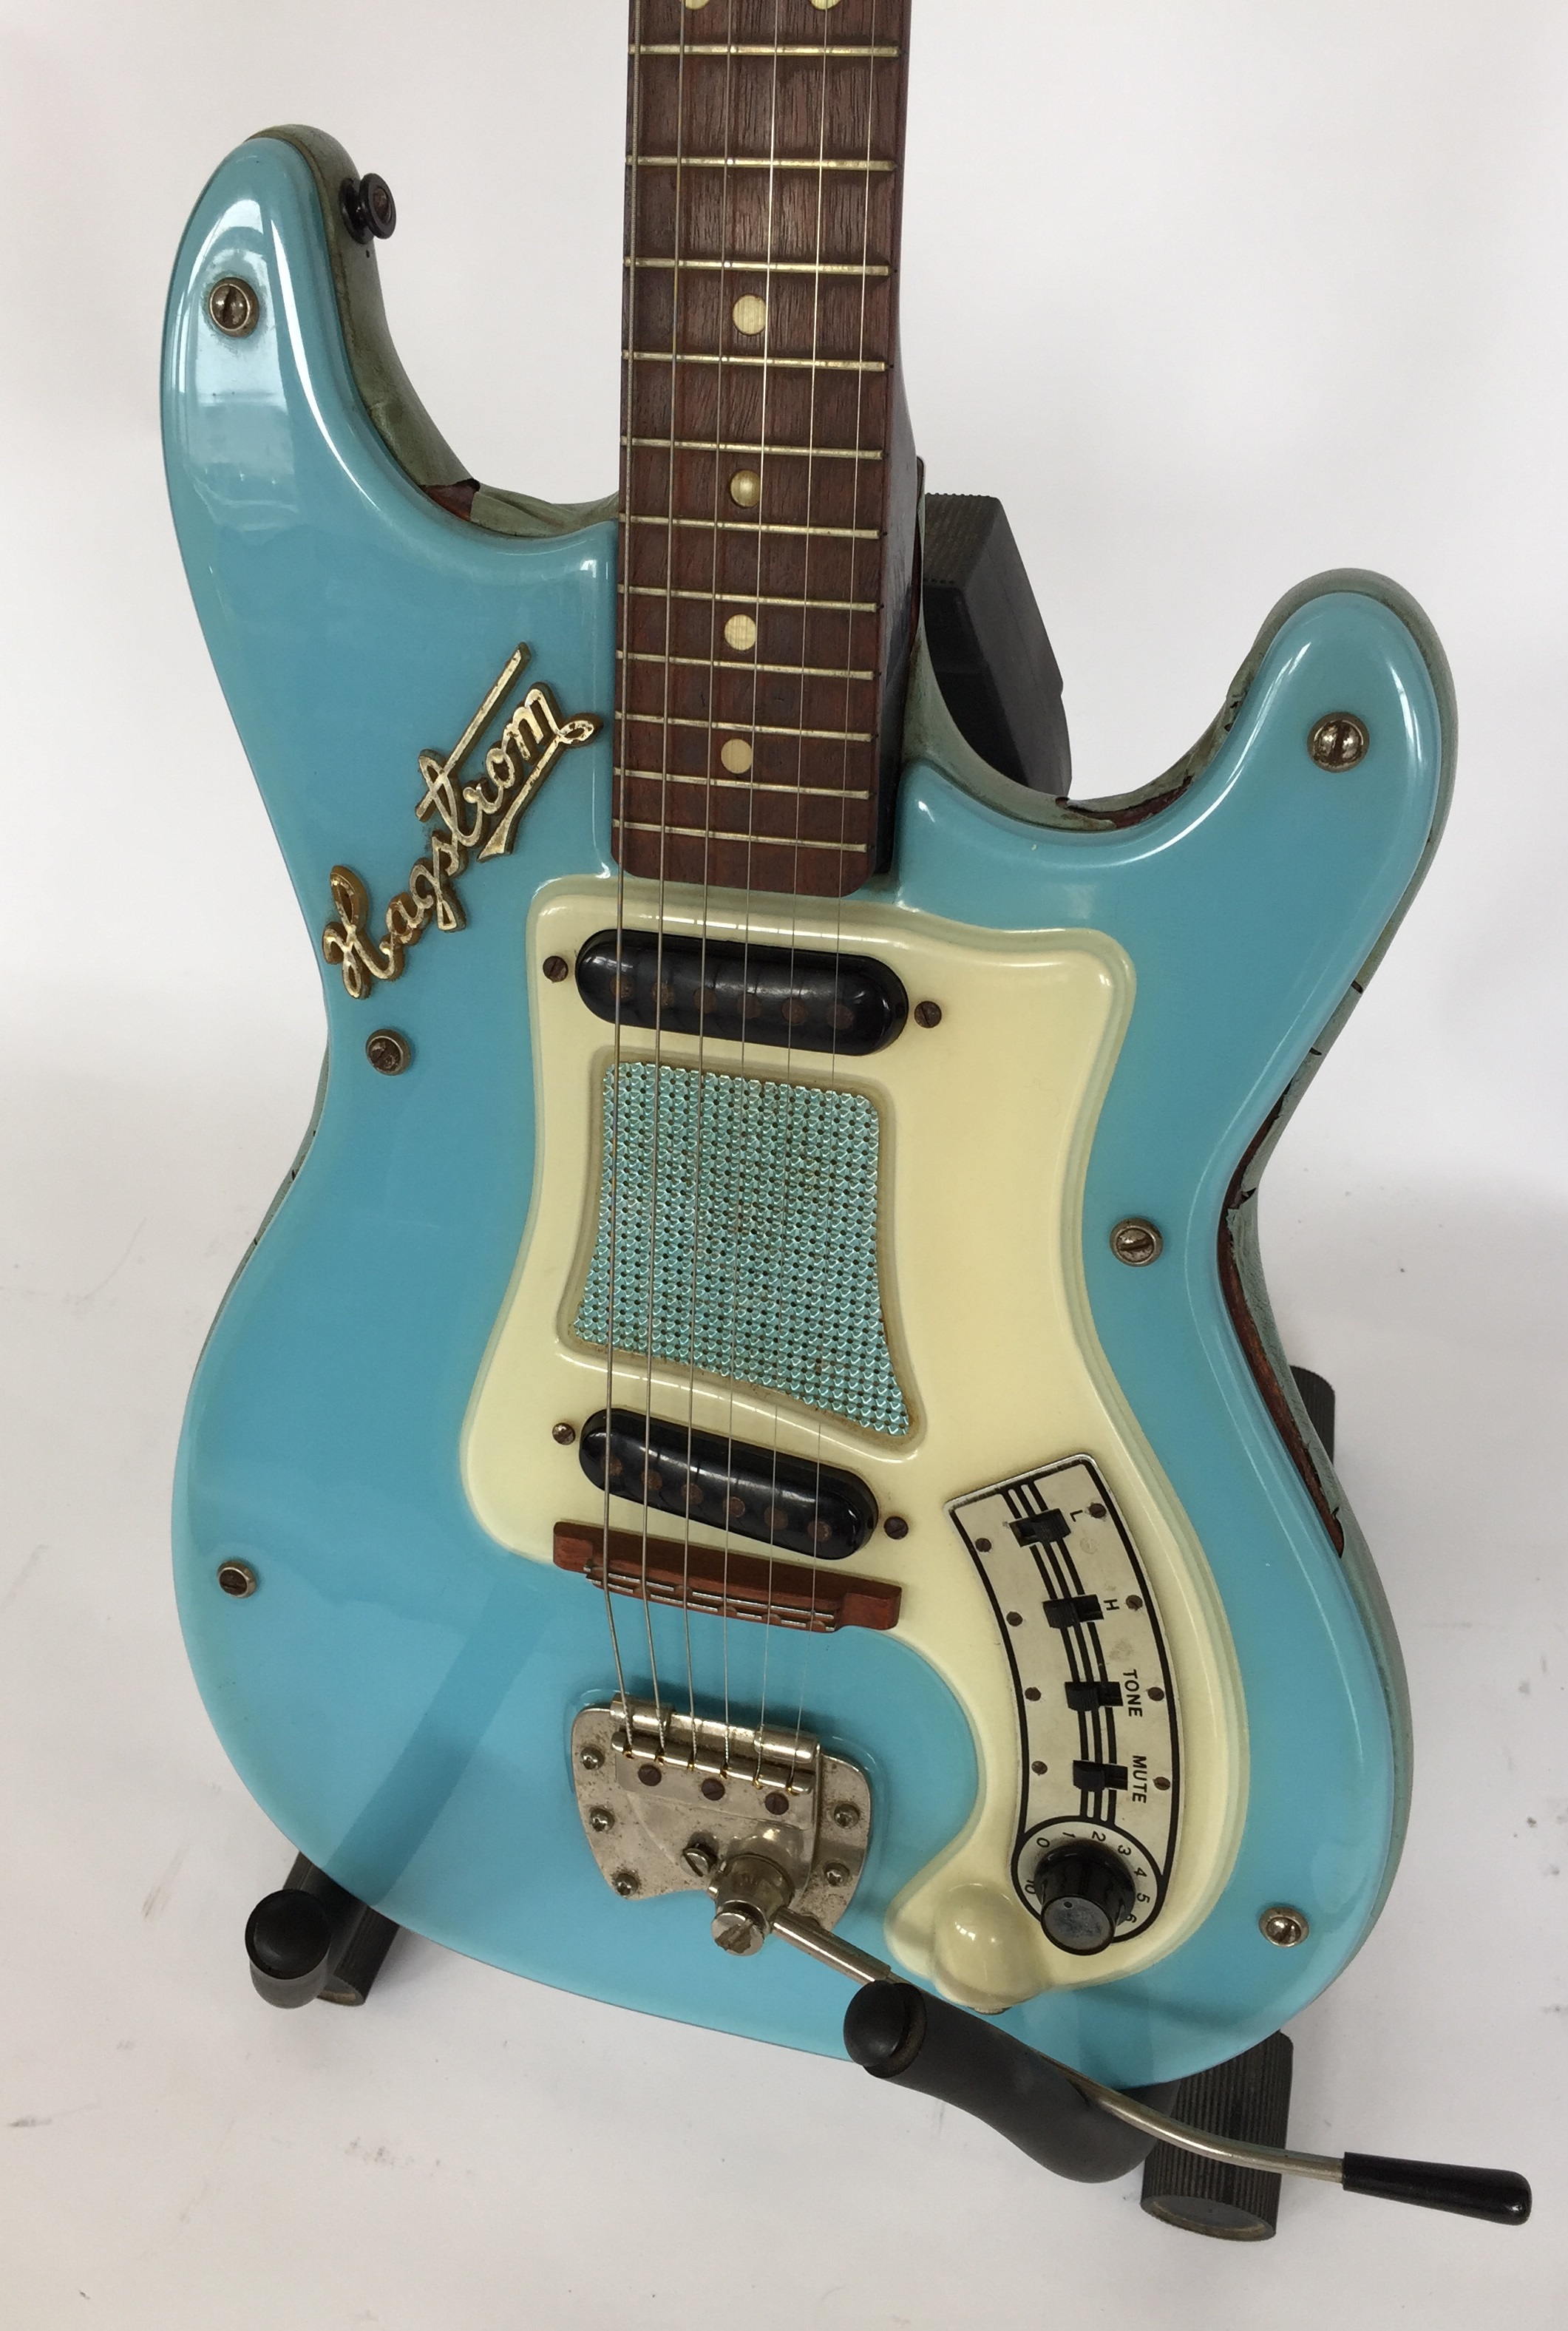 HAGSTROM FUTURAMA III 1964 BLUE - serial 603965. Hagstrom KENT electric guitar made in 1964. - Image 2 of 9